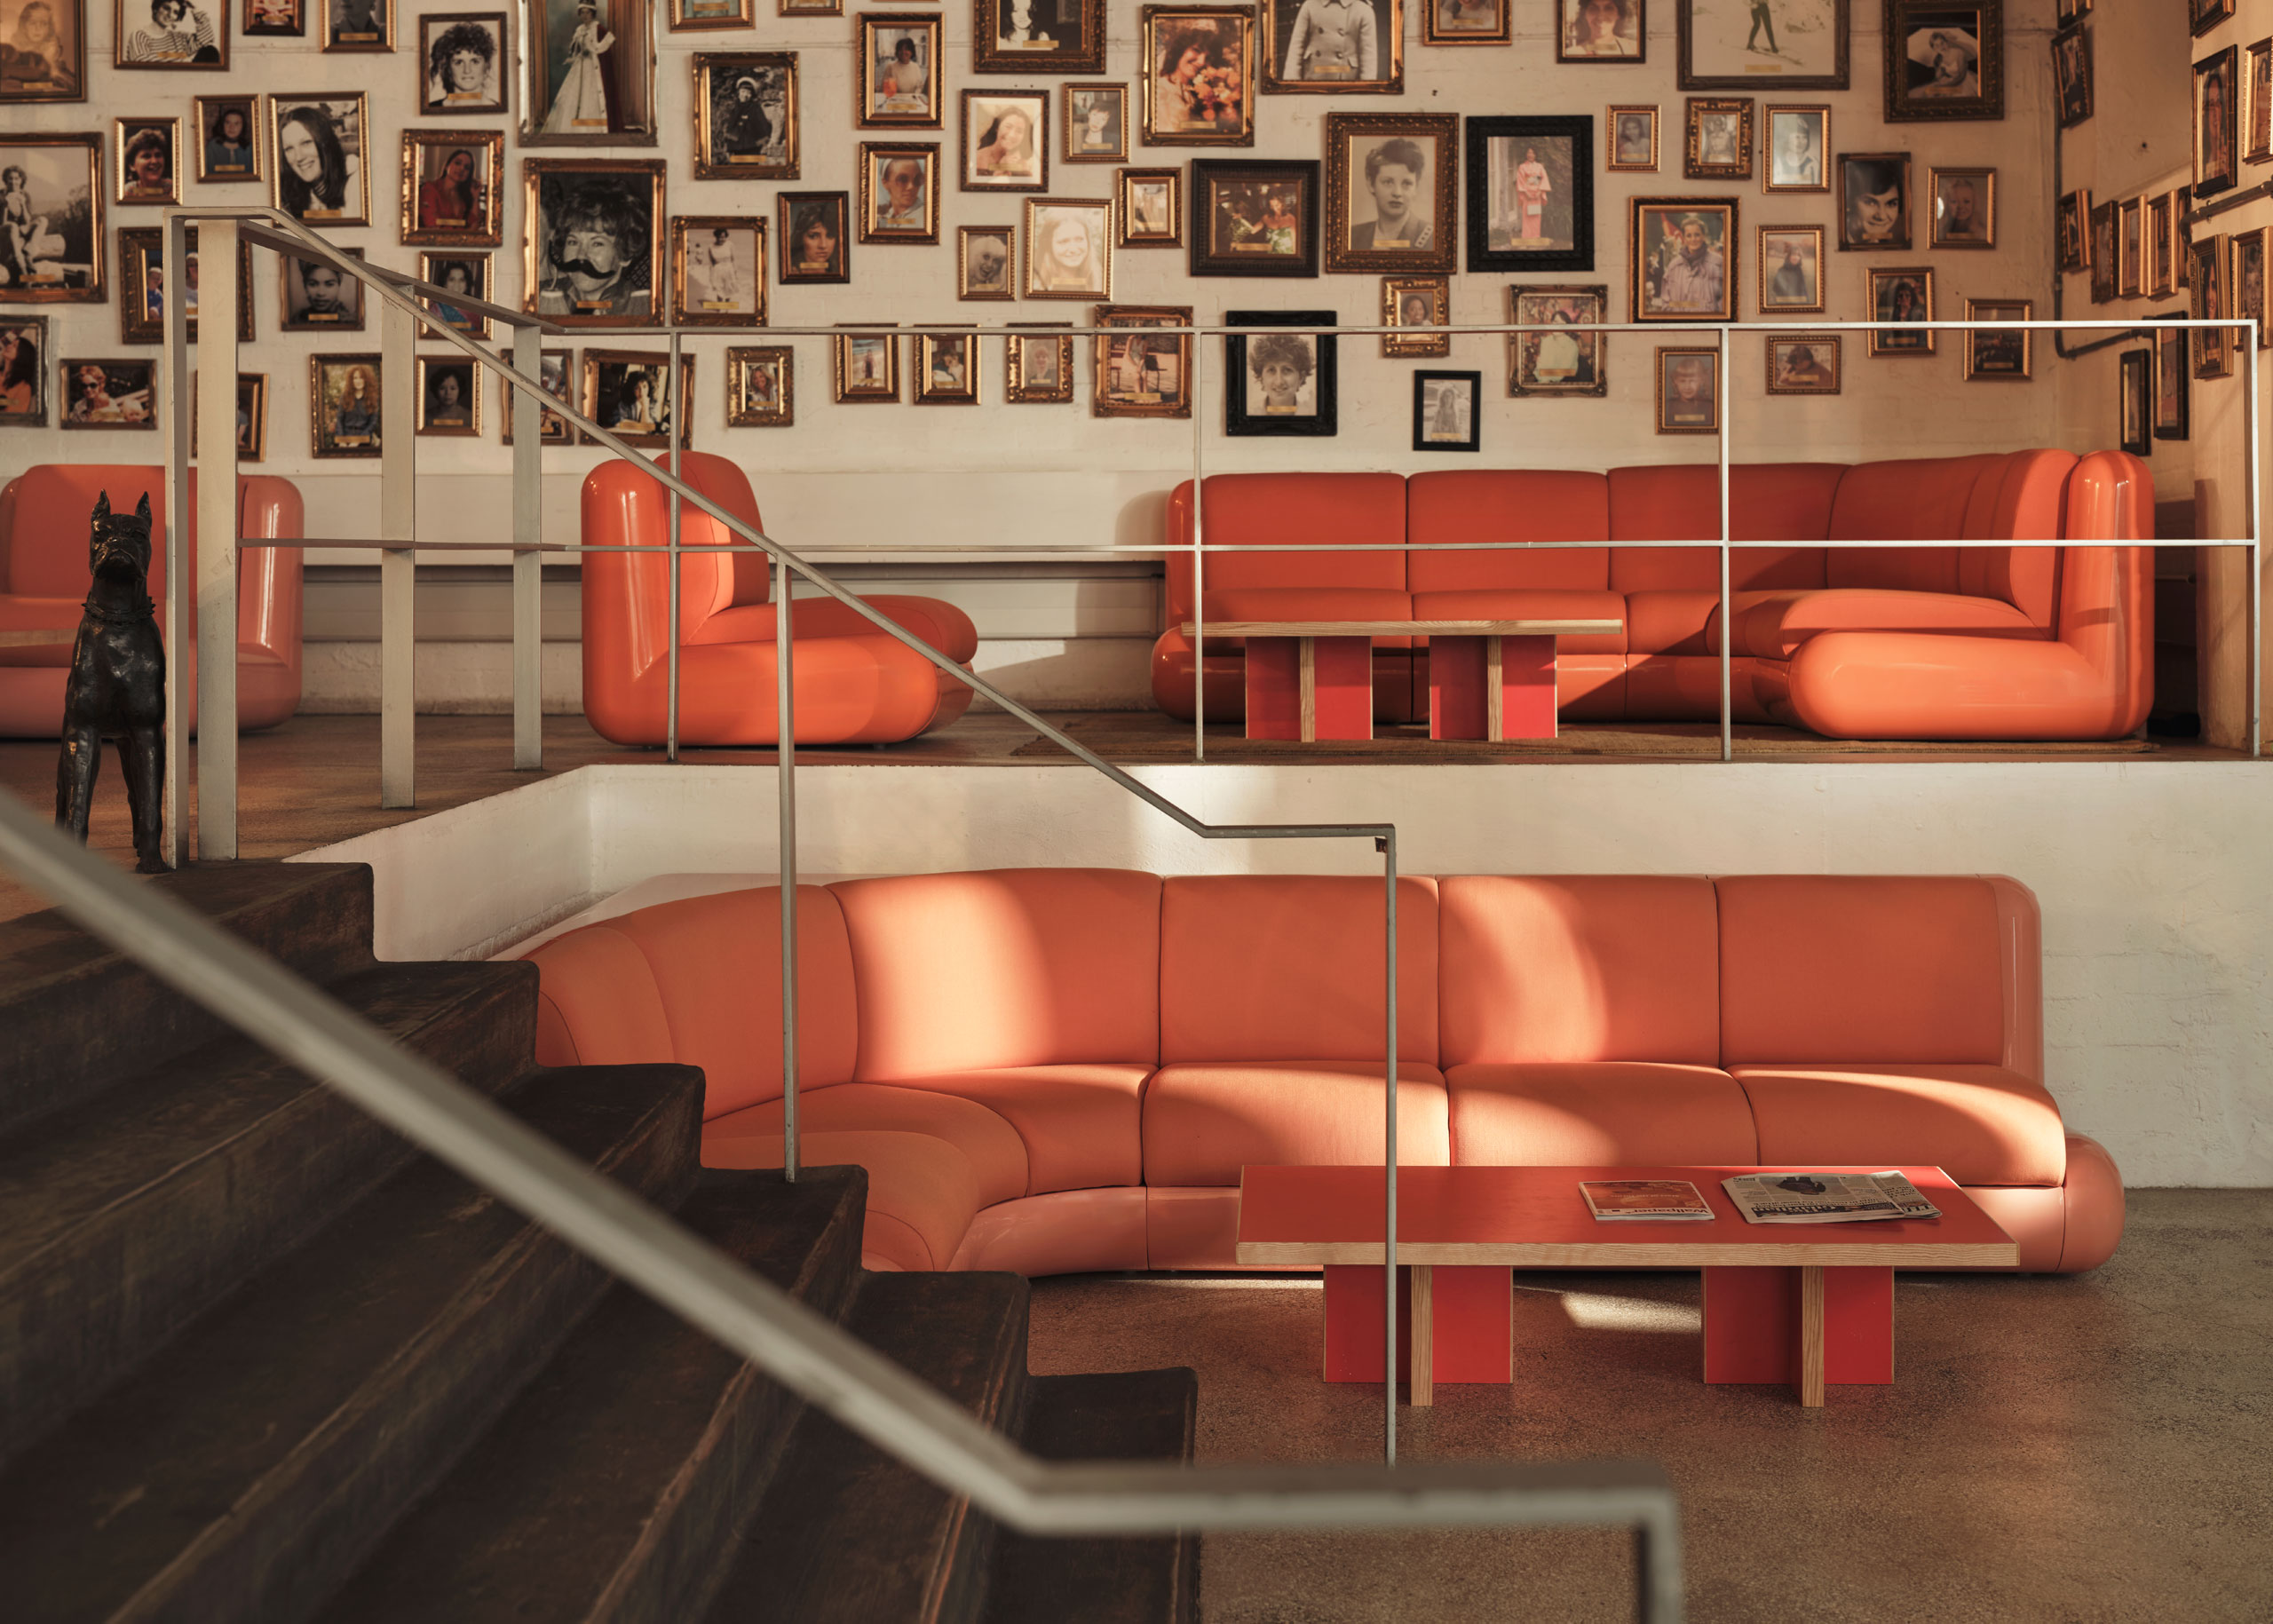 T4 Modular sofa  by Holloway Li for Uma; Bespoke Coffee tables by Holloway Li.
Photography by Felix Speller.